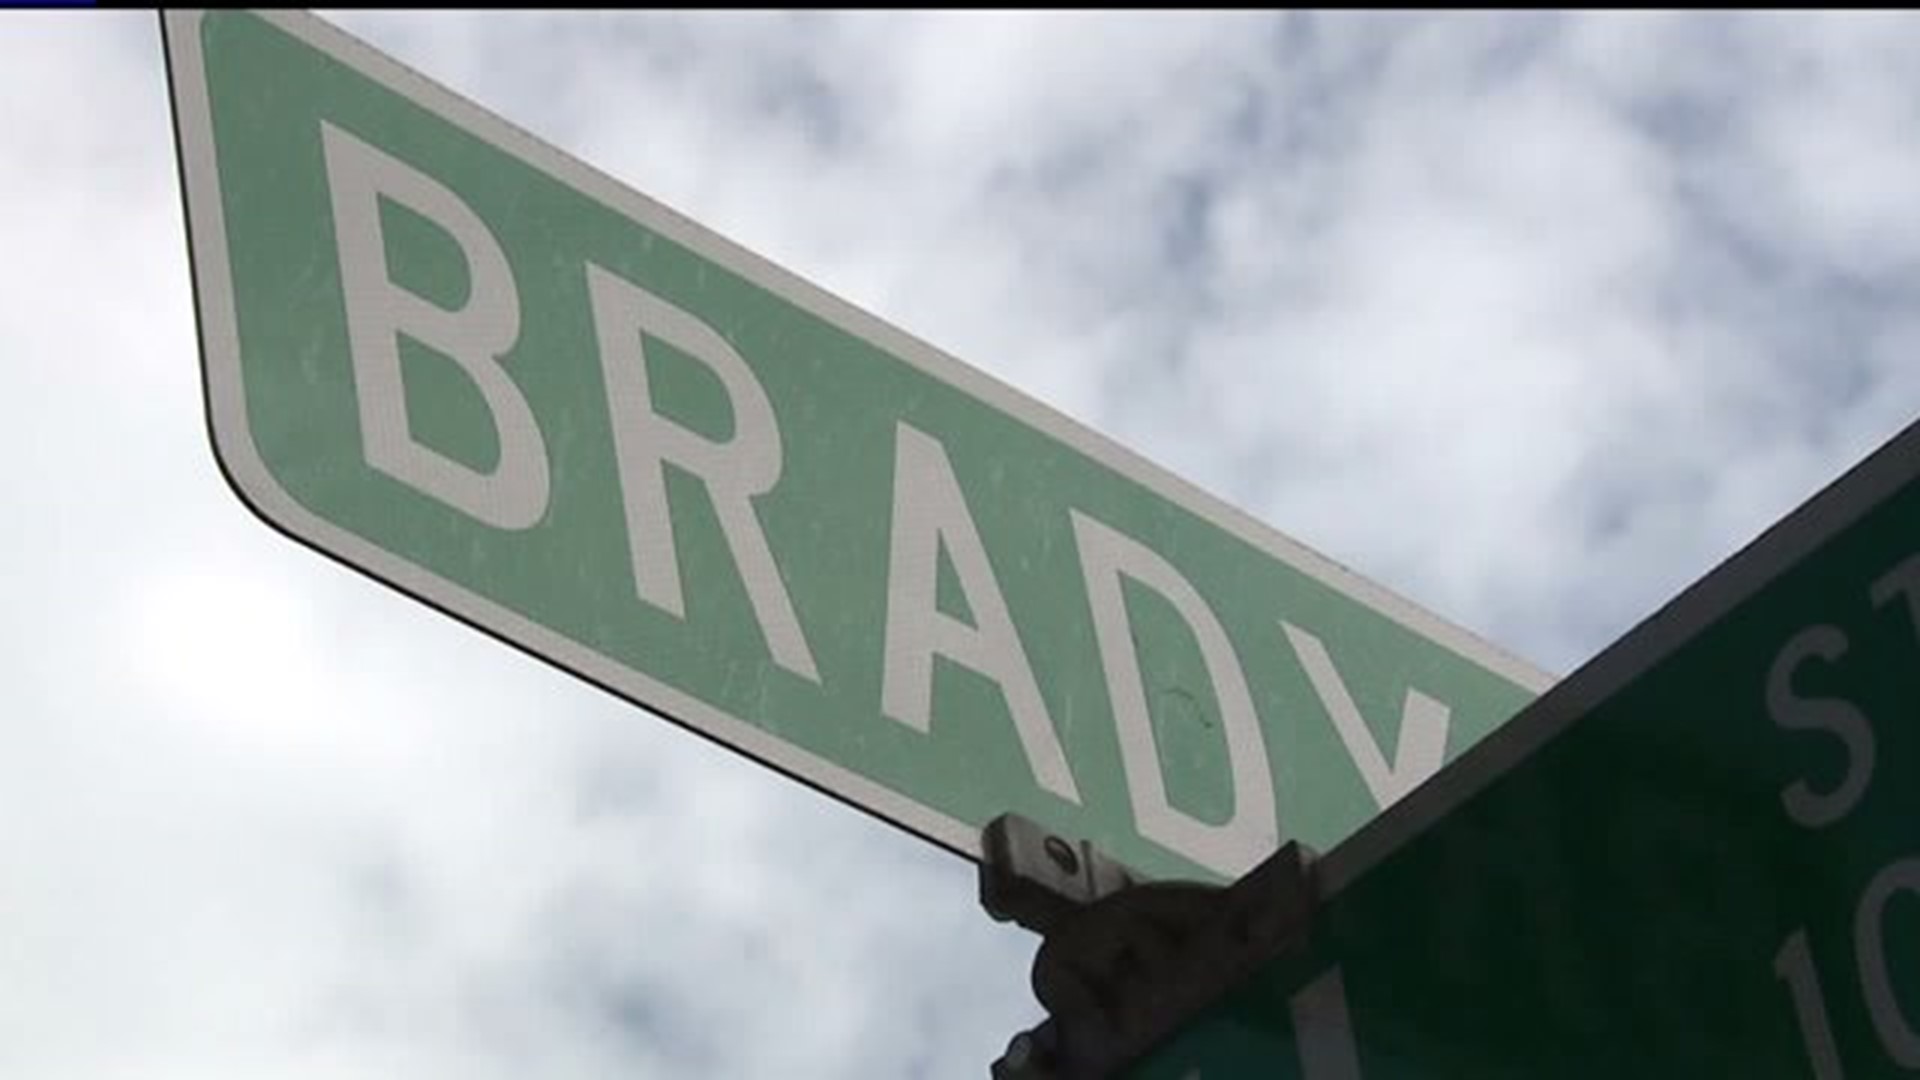 Brady Street traffic pattern changes for Harrison Street construction